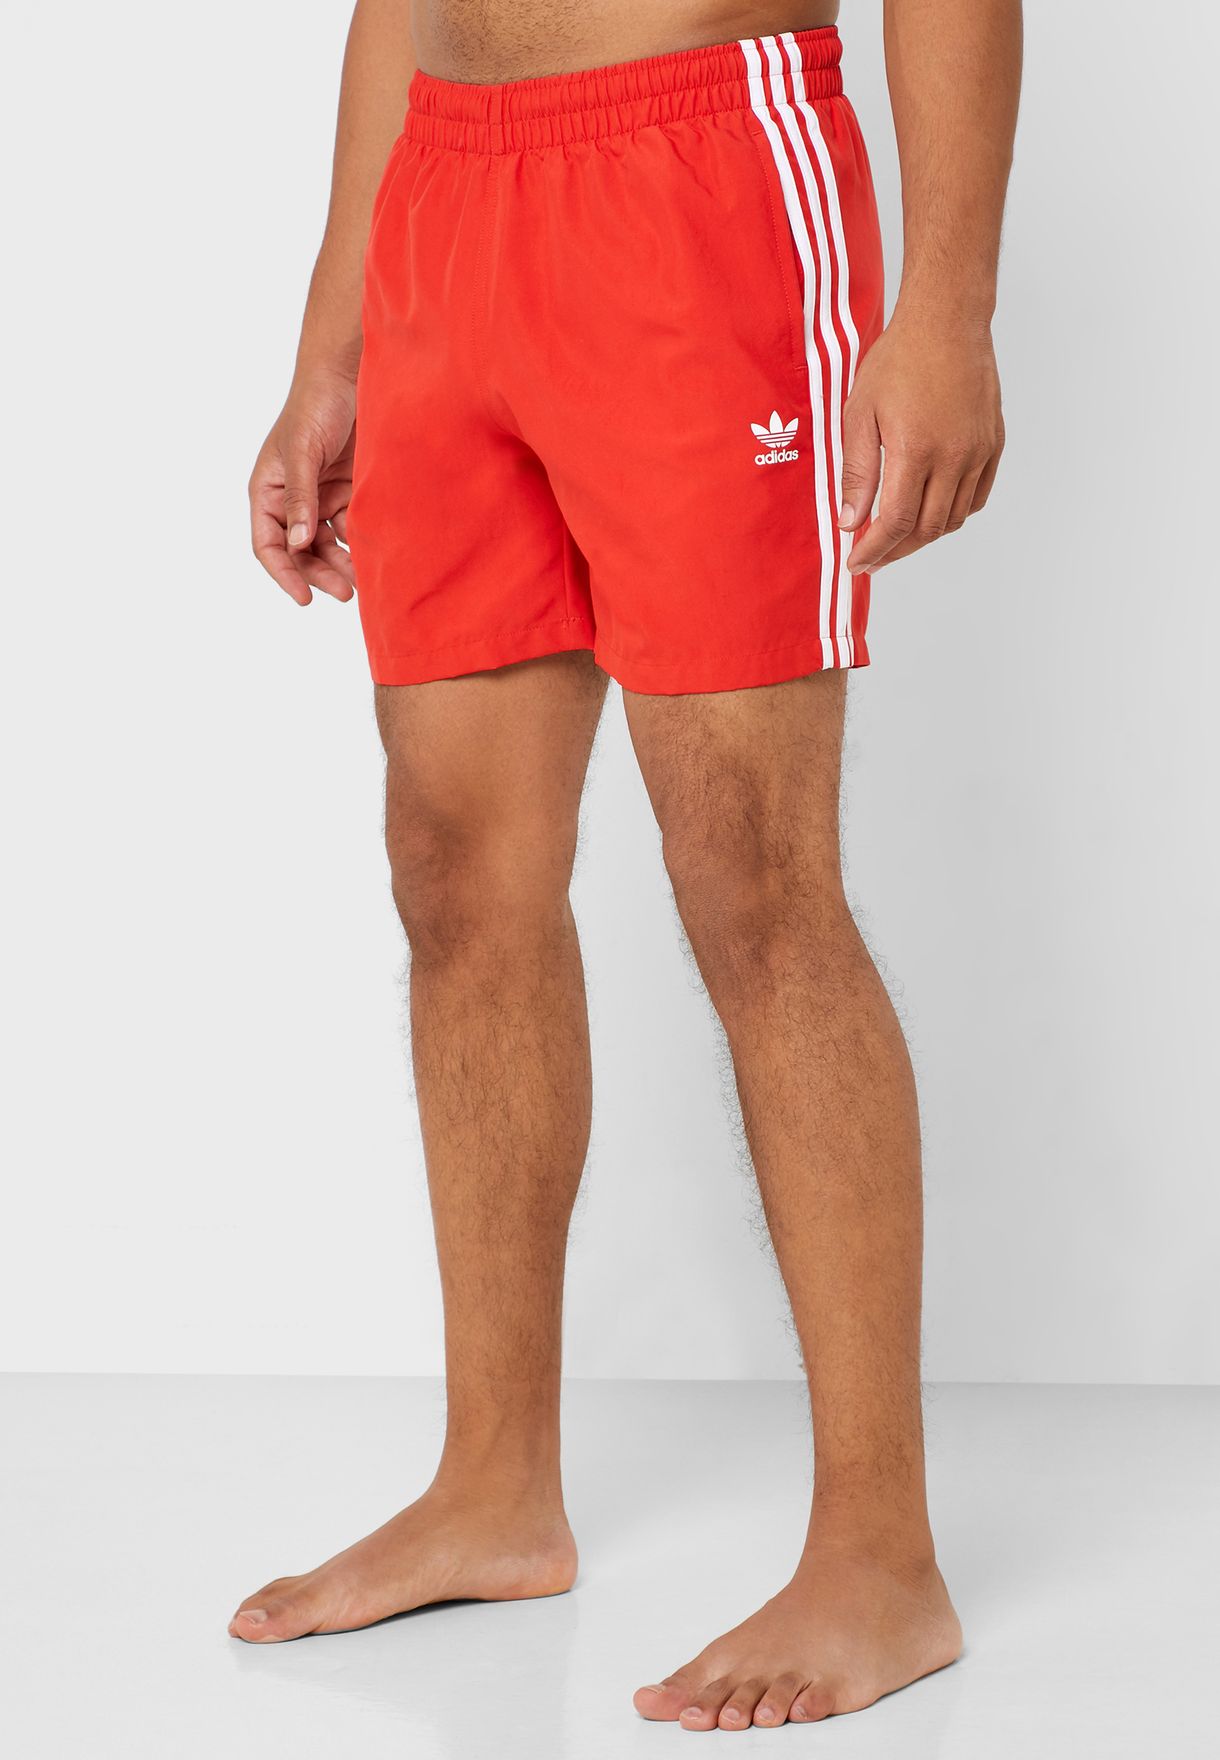 adidas originals red shorts